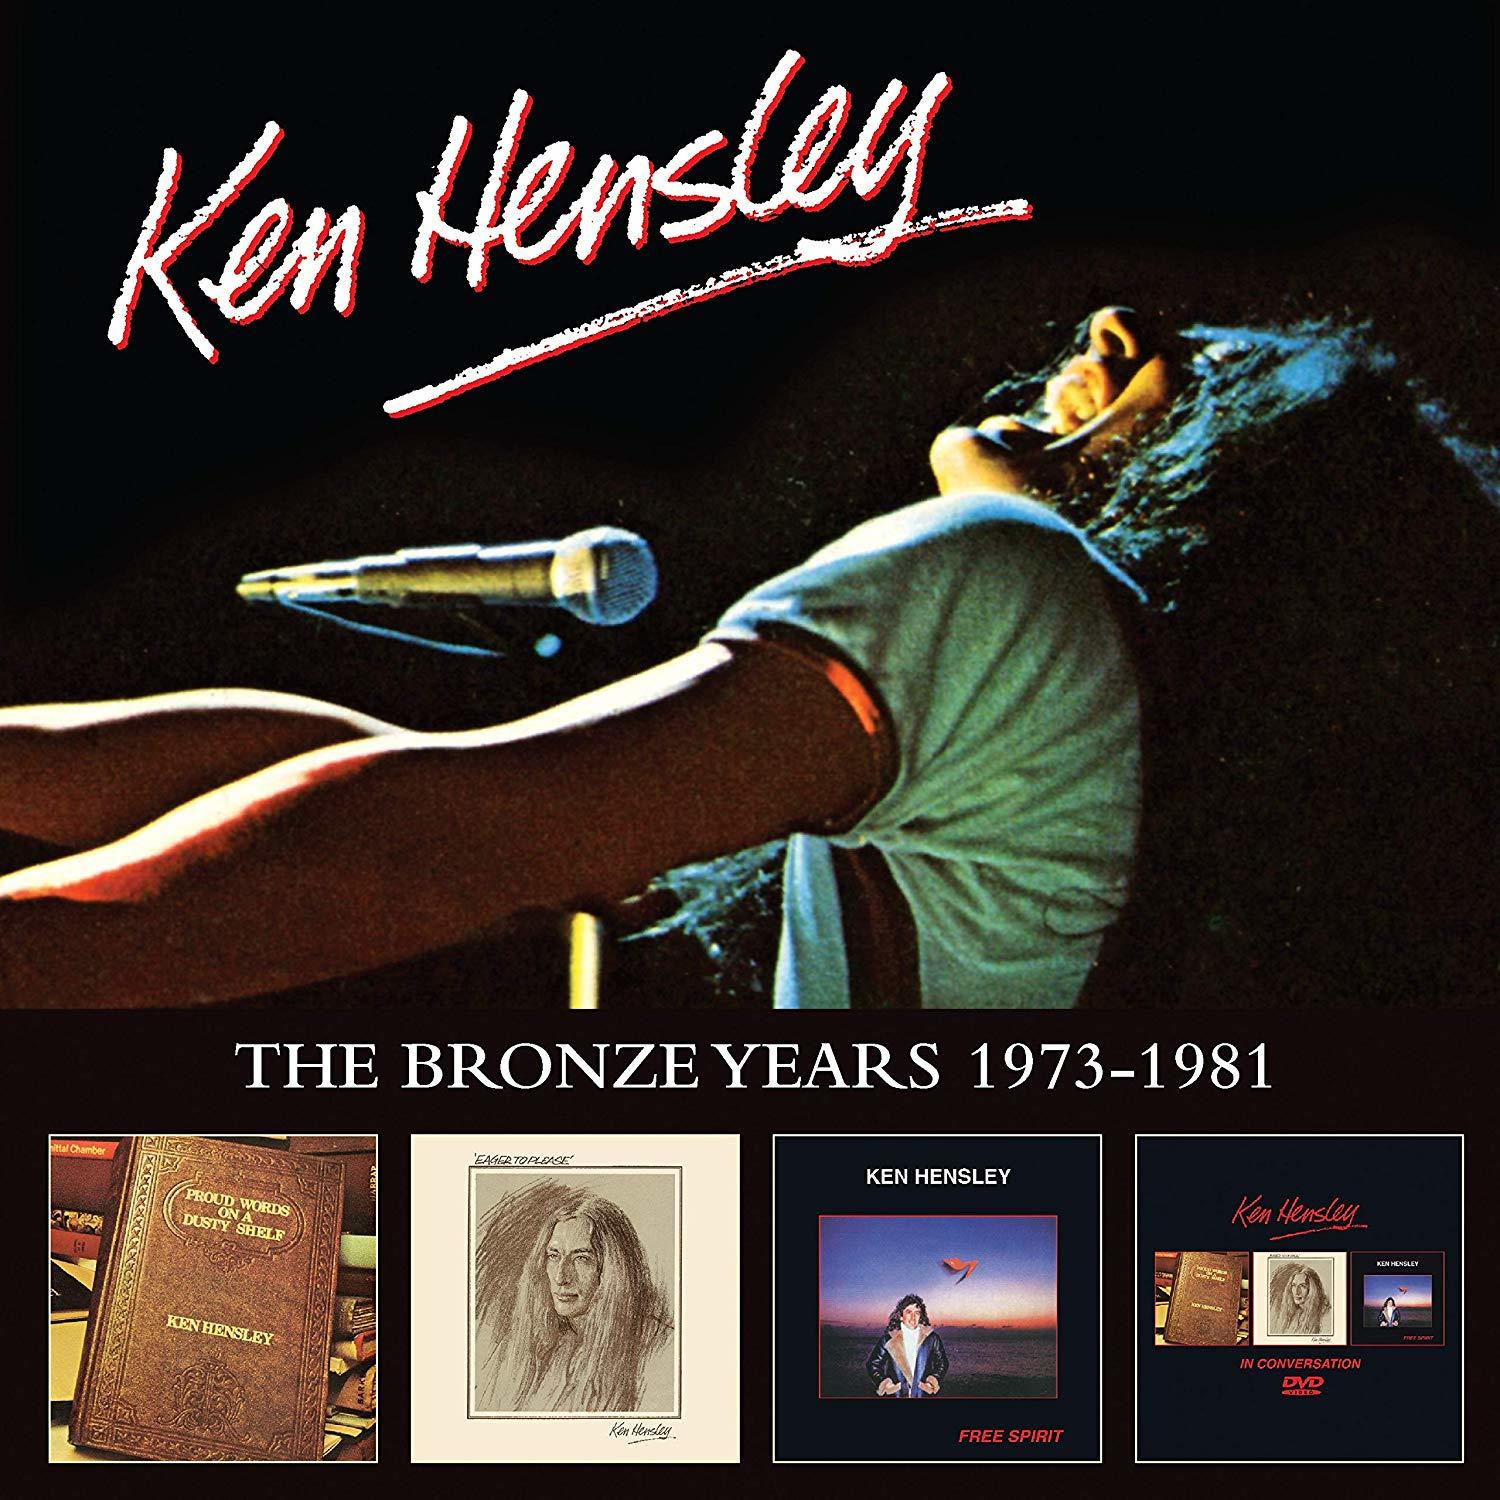 Video) (3CD/1DVD - - The Box) Ken 1973-1981 Years + Hensley DVD (CD Bronze